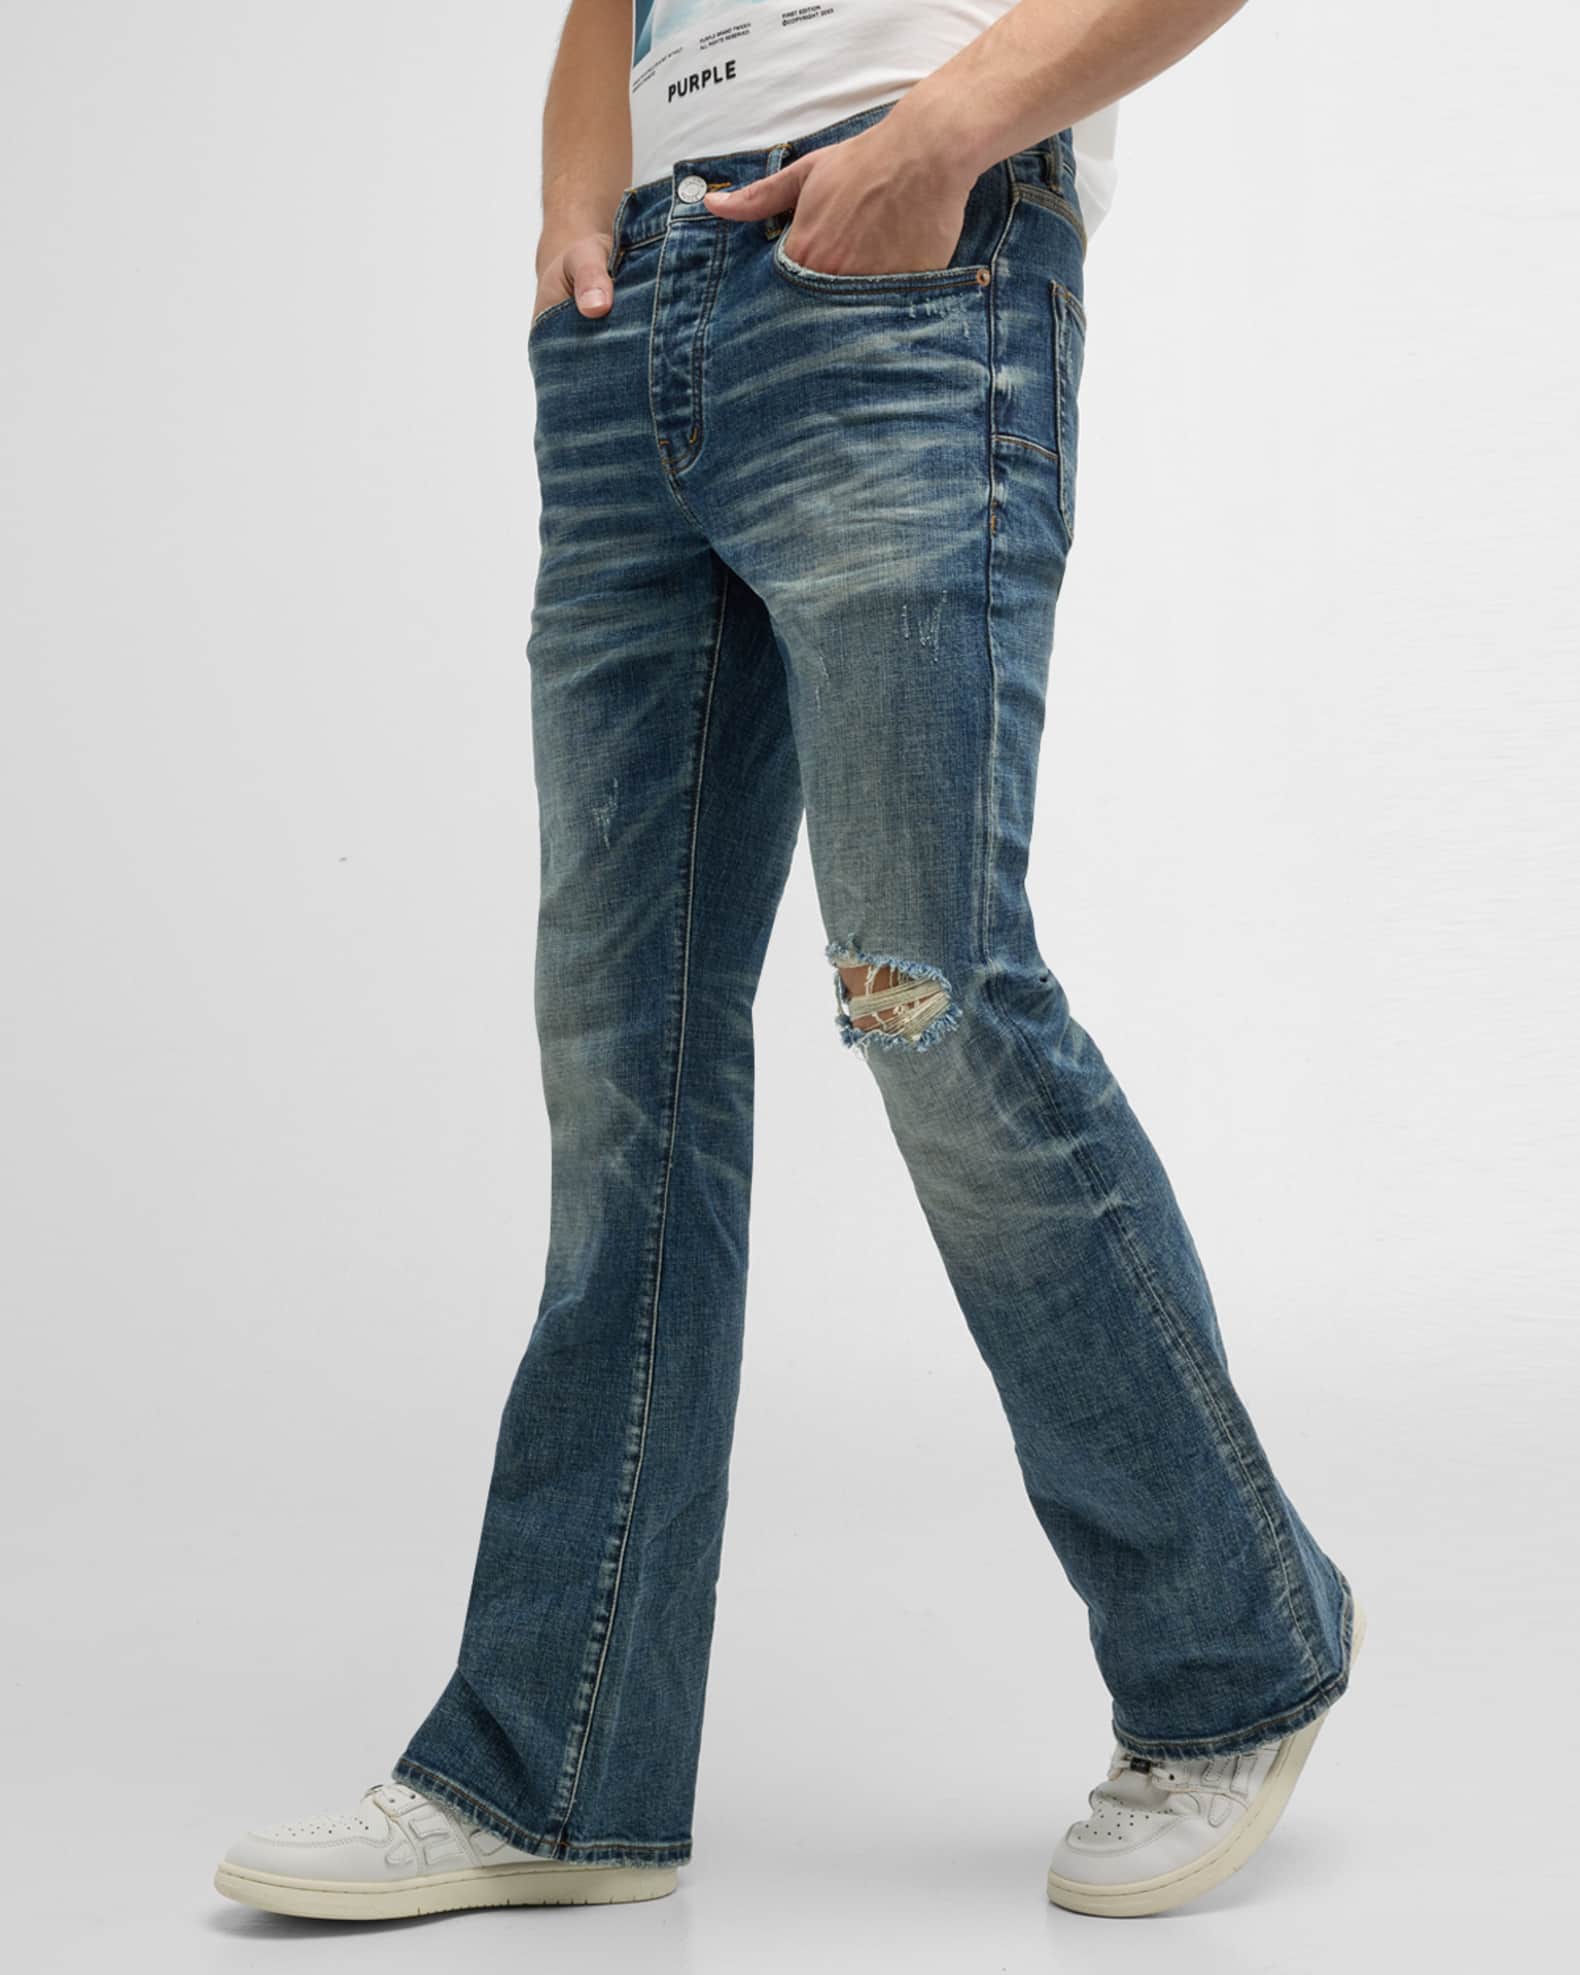 PURPLE Men's 1 Year Fade Flare Jeans | Neiman Marcus